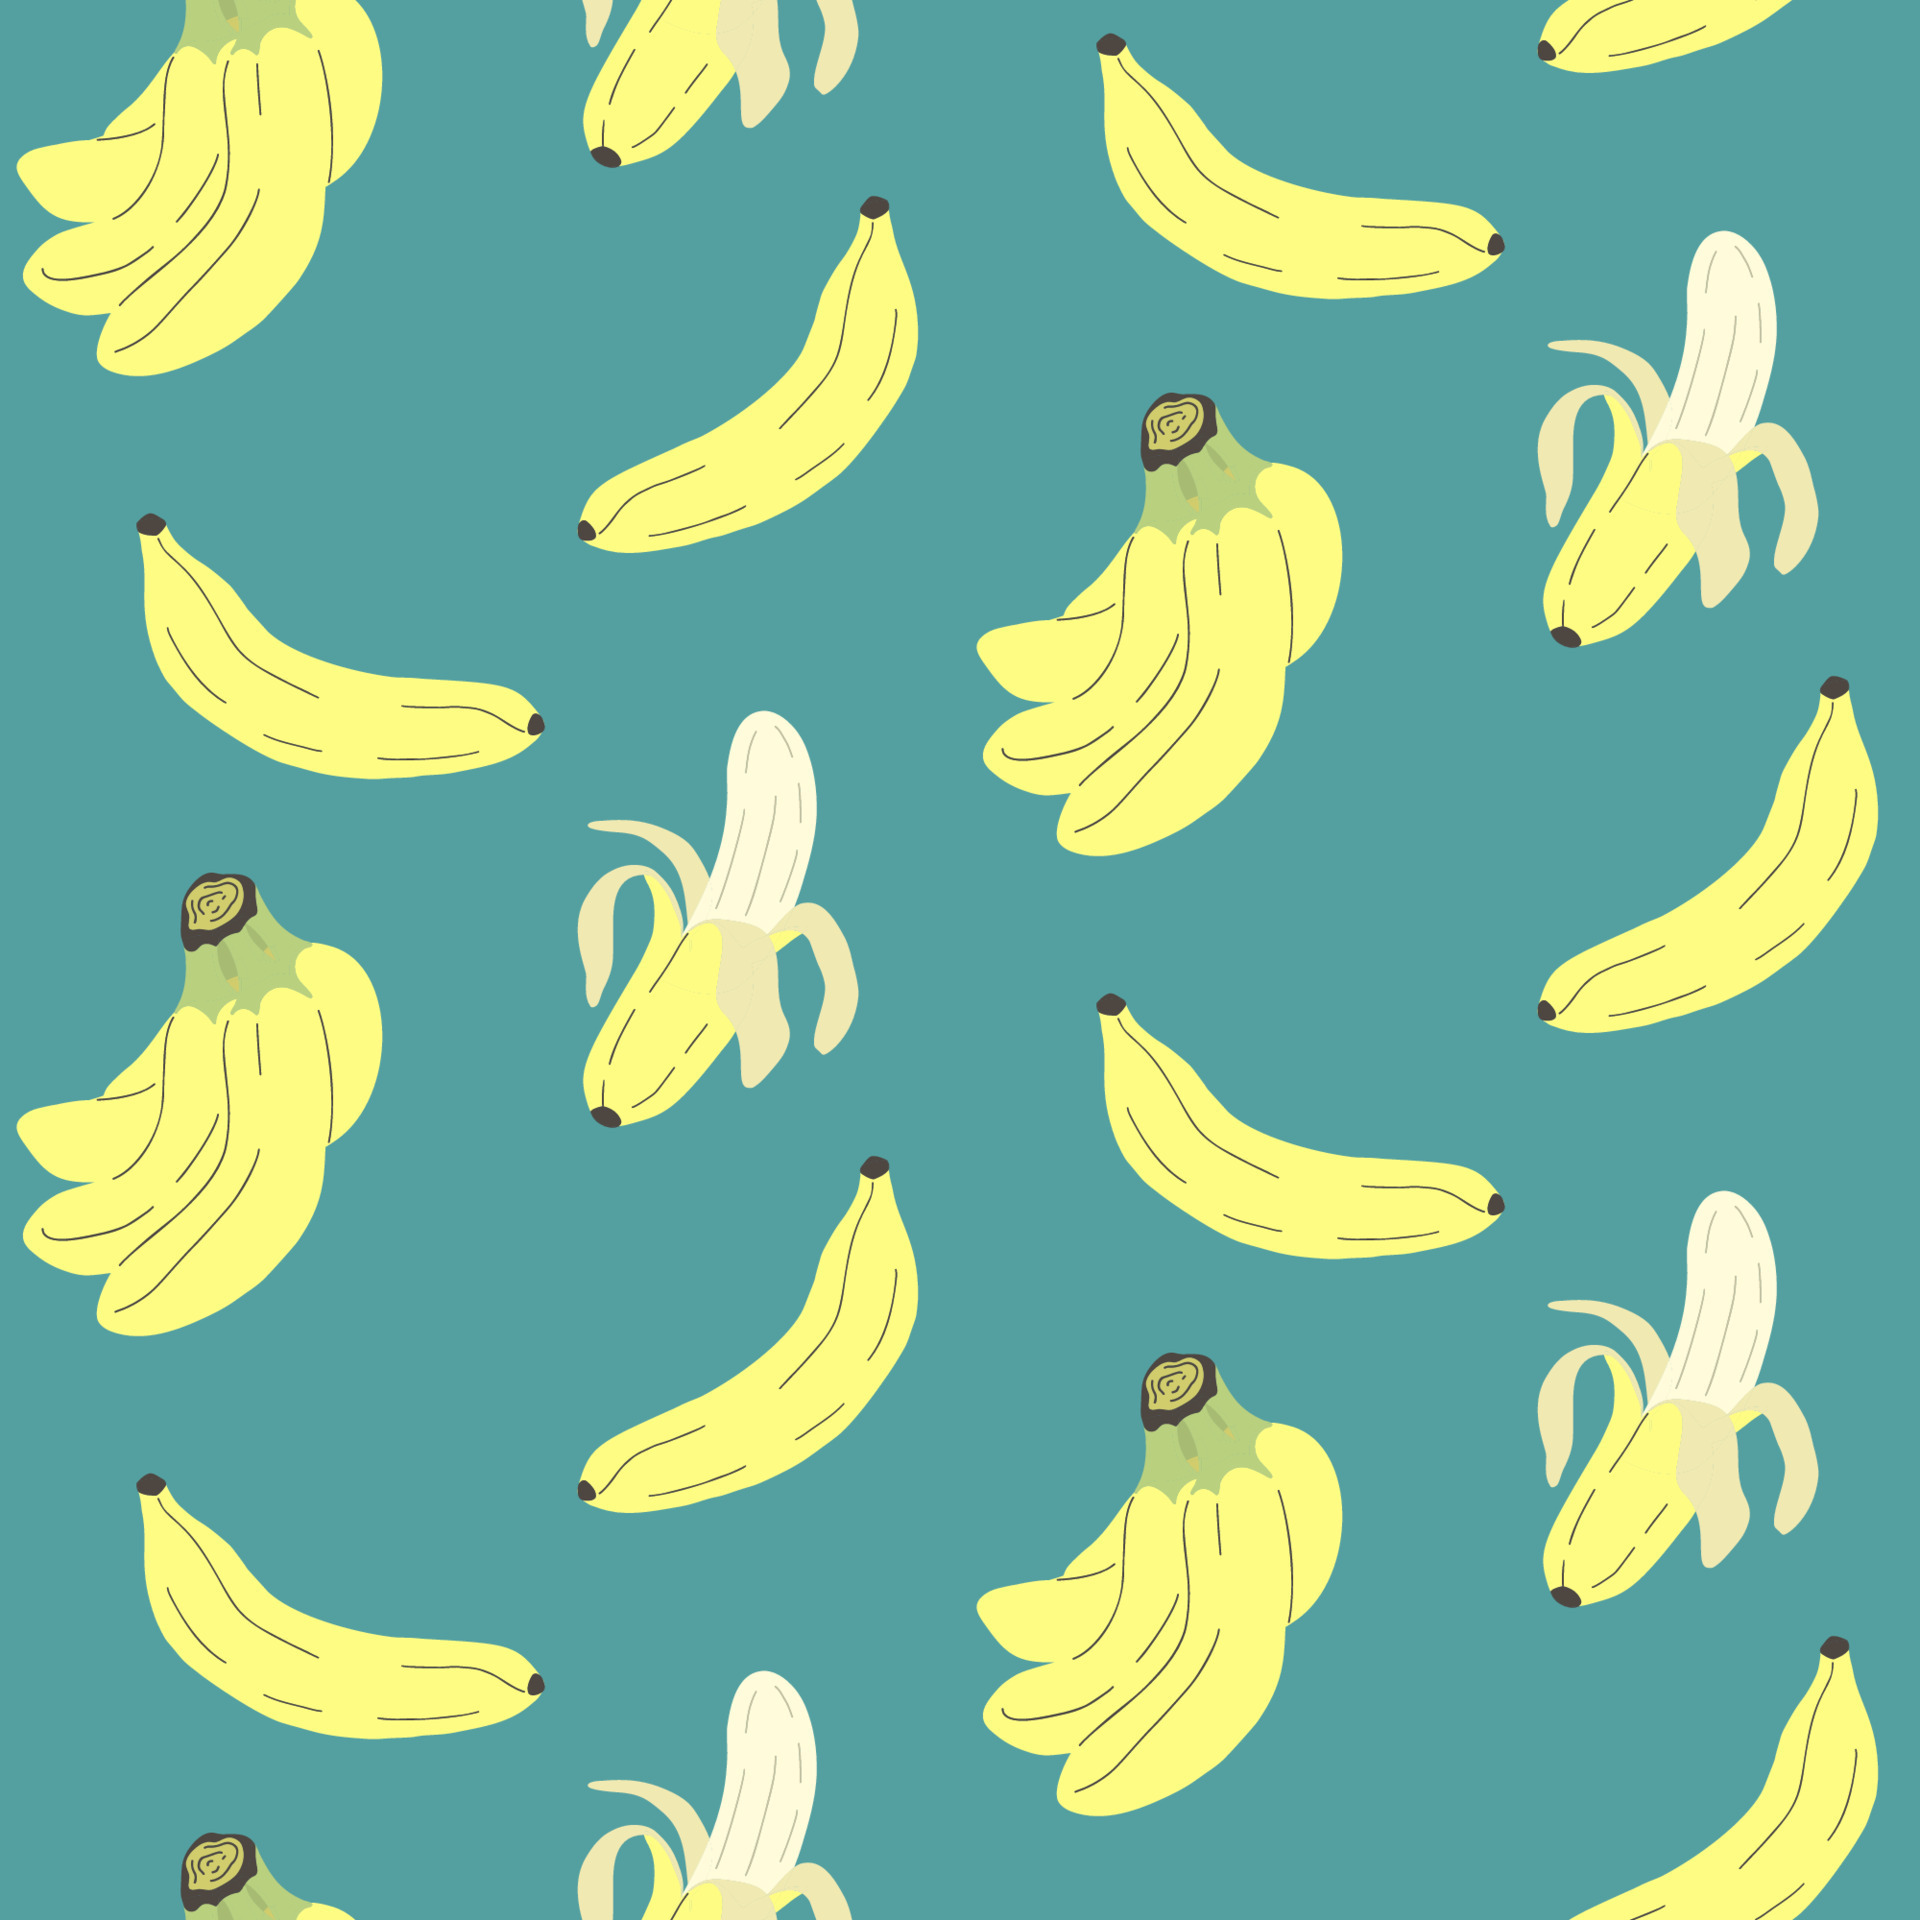 Cute Yellow Banana Seamless Wallpaper Background Stock Vector Royalty  Free 639825982  Shutterstock